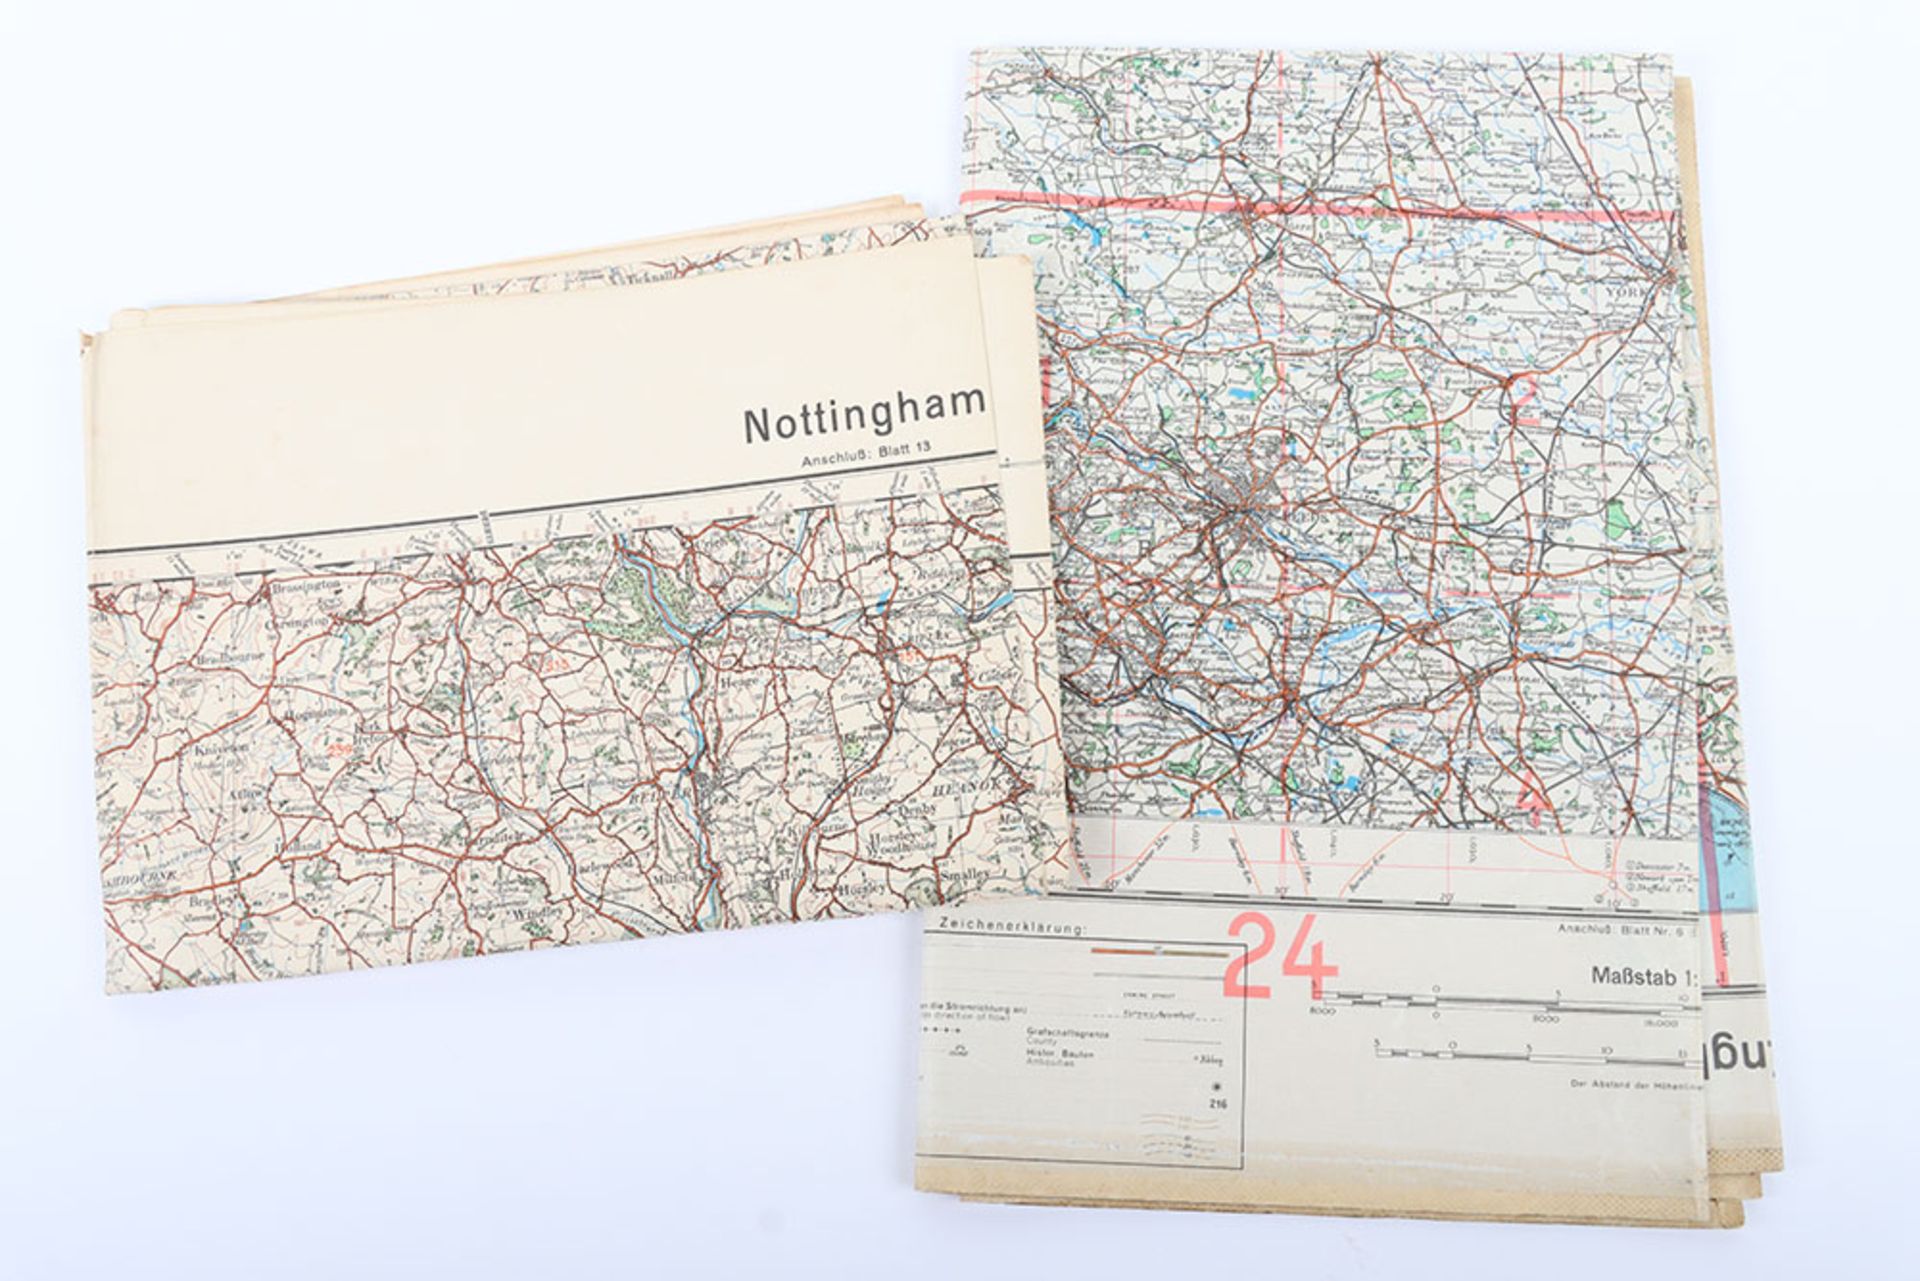 2x Luftwaffe Bombing Maps of the United Kingdom